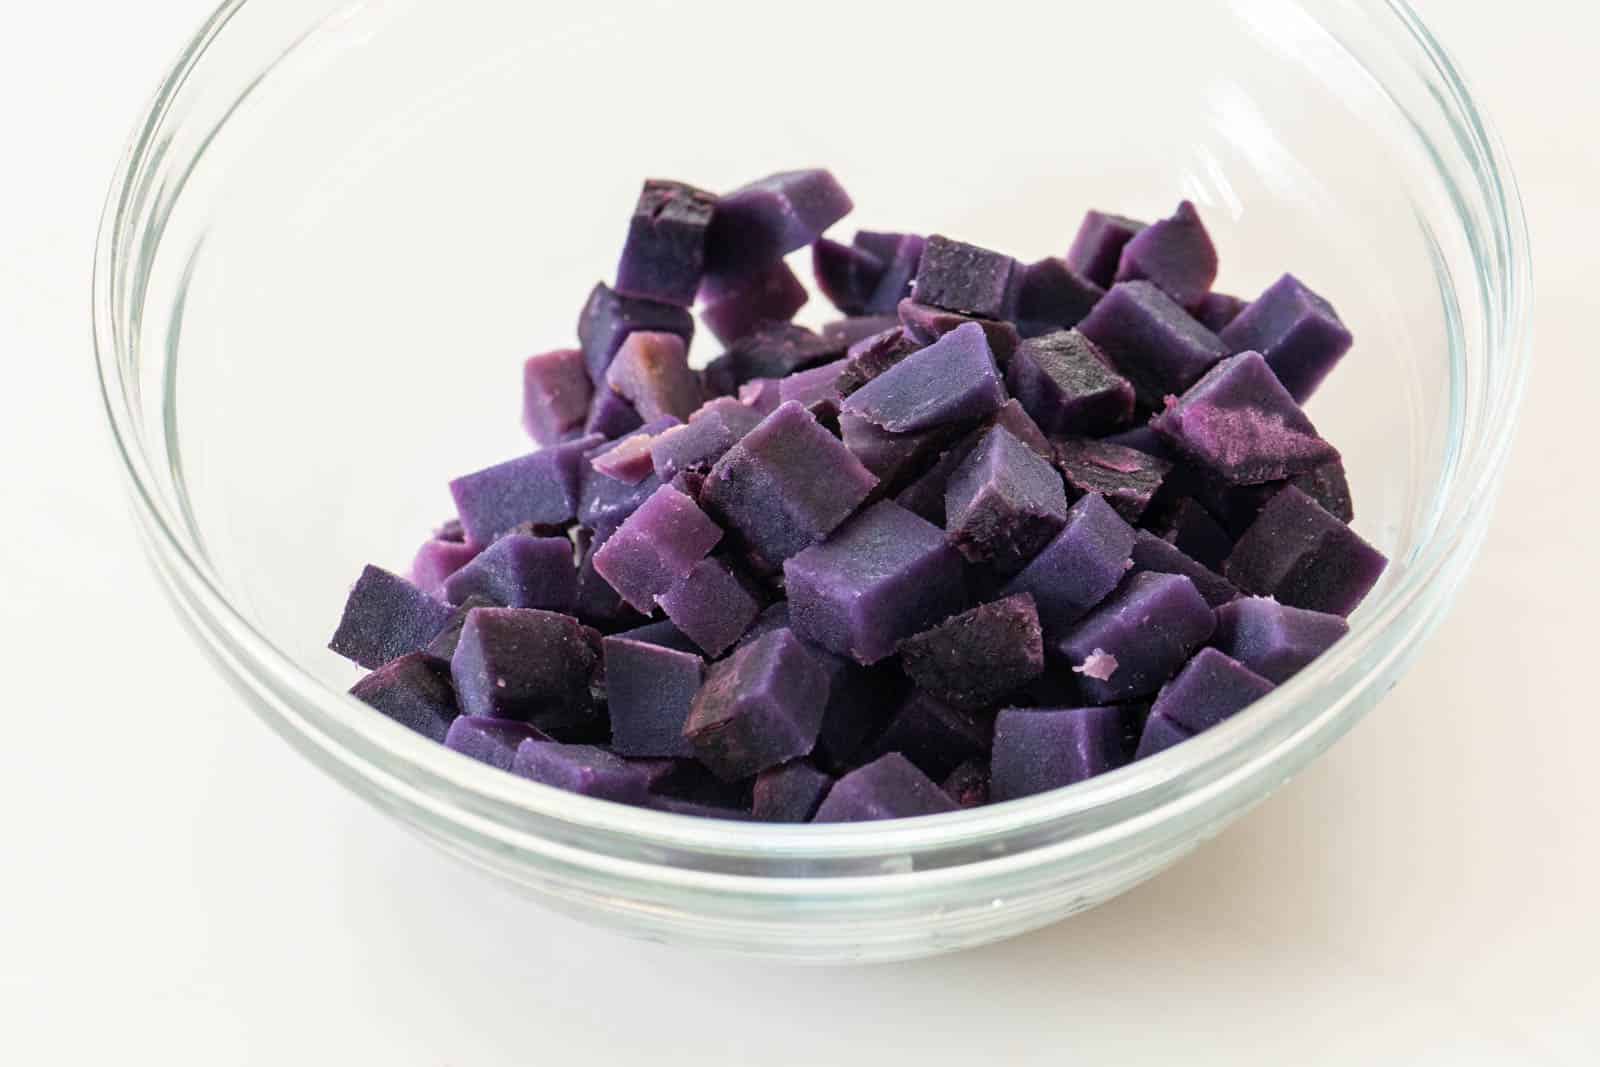 Cubed Purple Sweet Potato